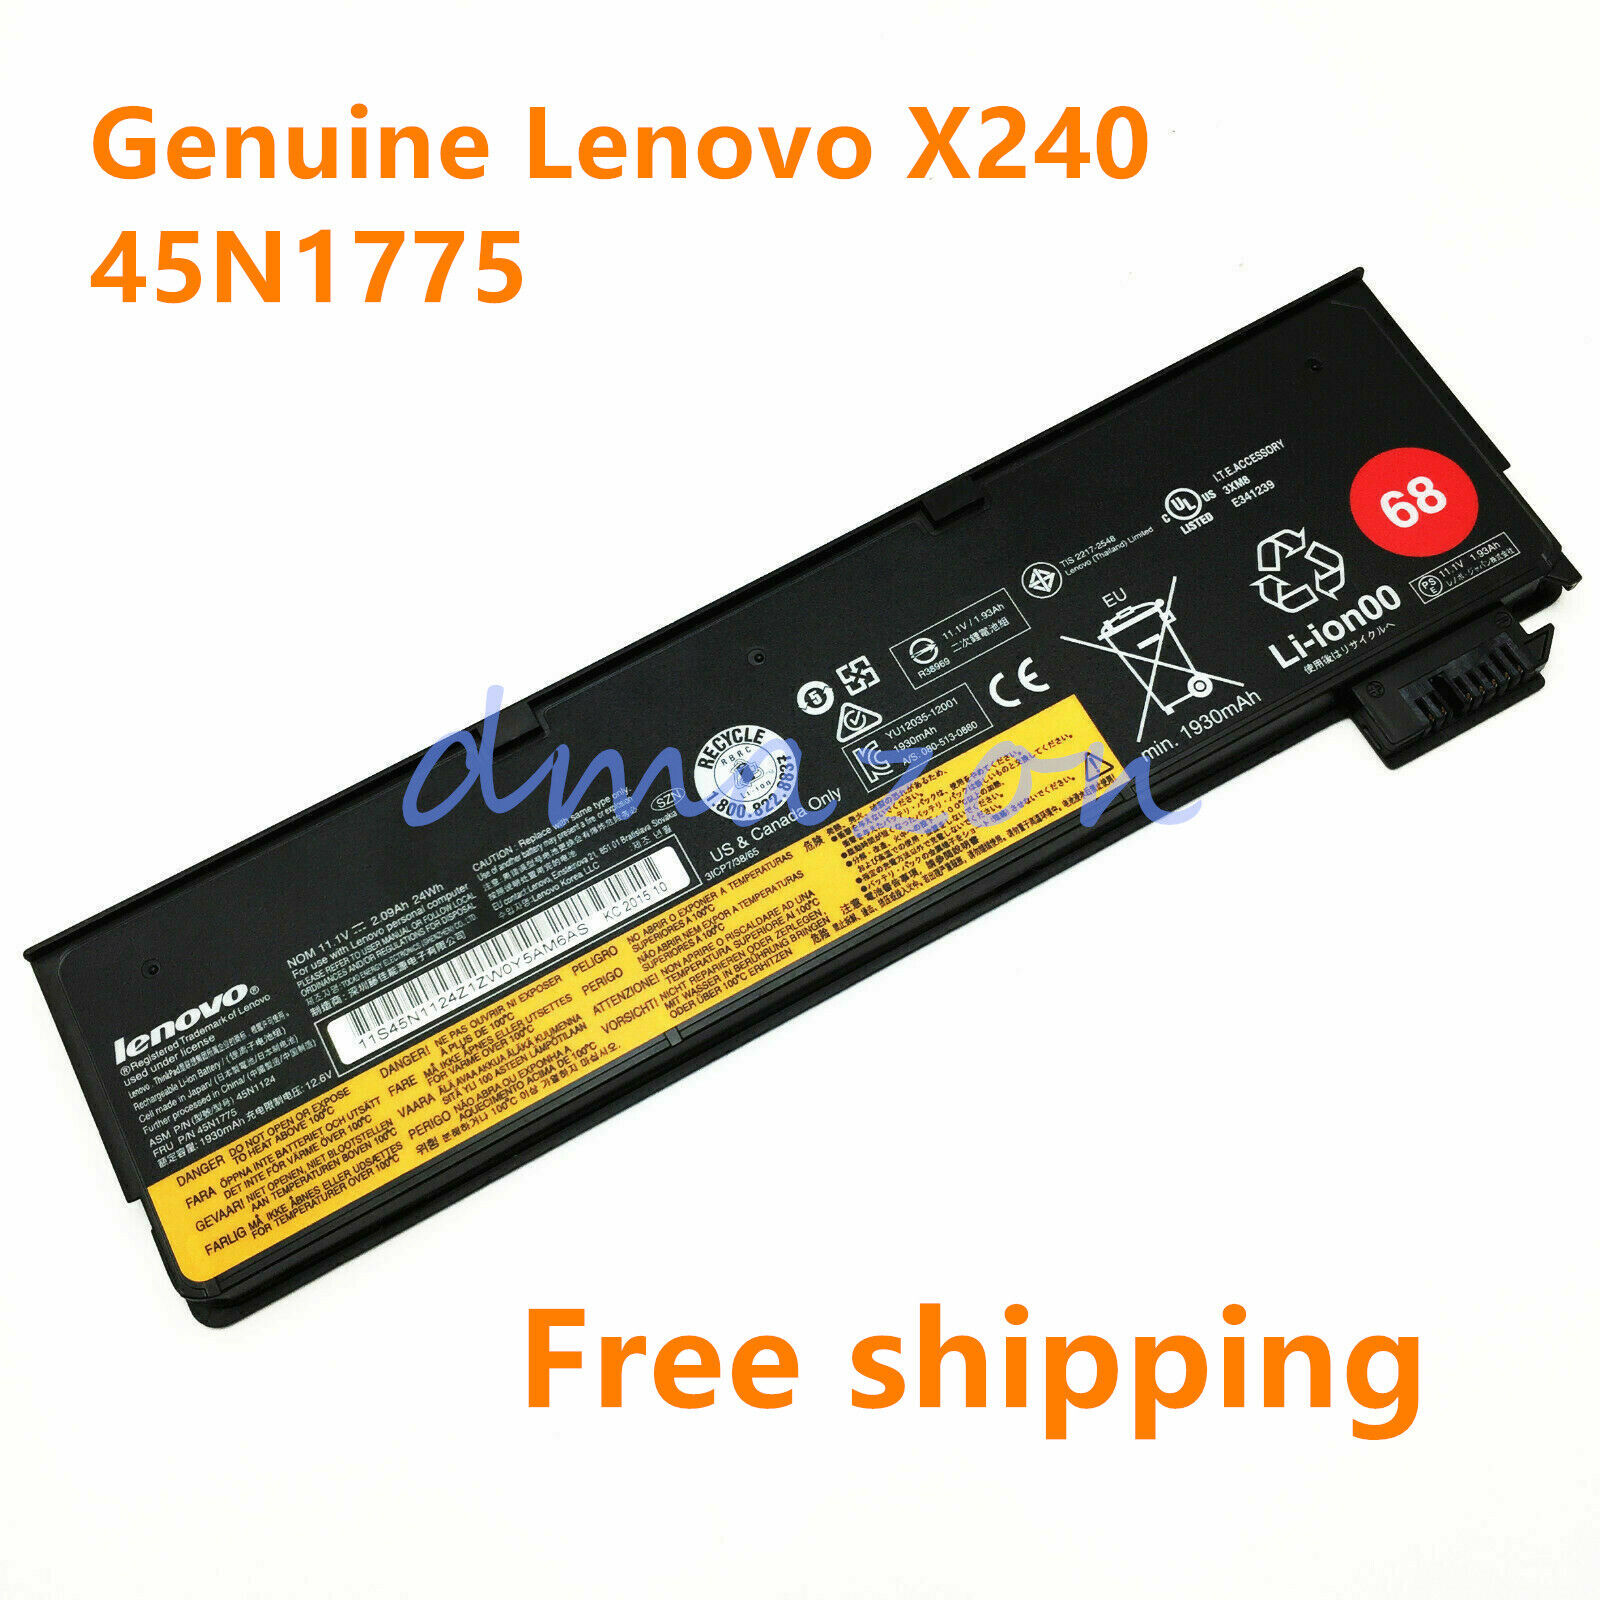 68 New Genuine X240 Battery for L enovo ThinkPad X240S X250 X260 X270 T440 T440S